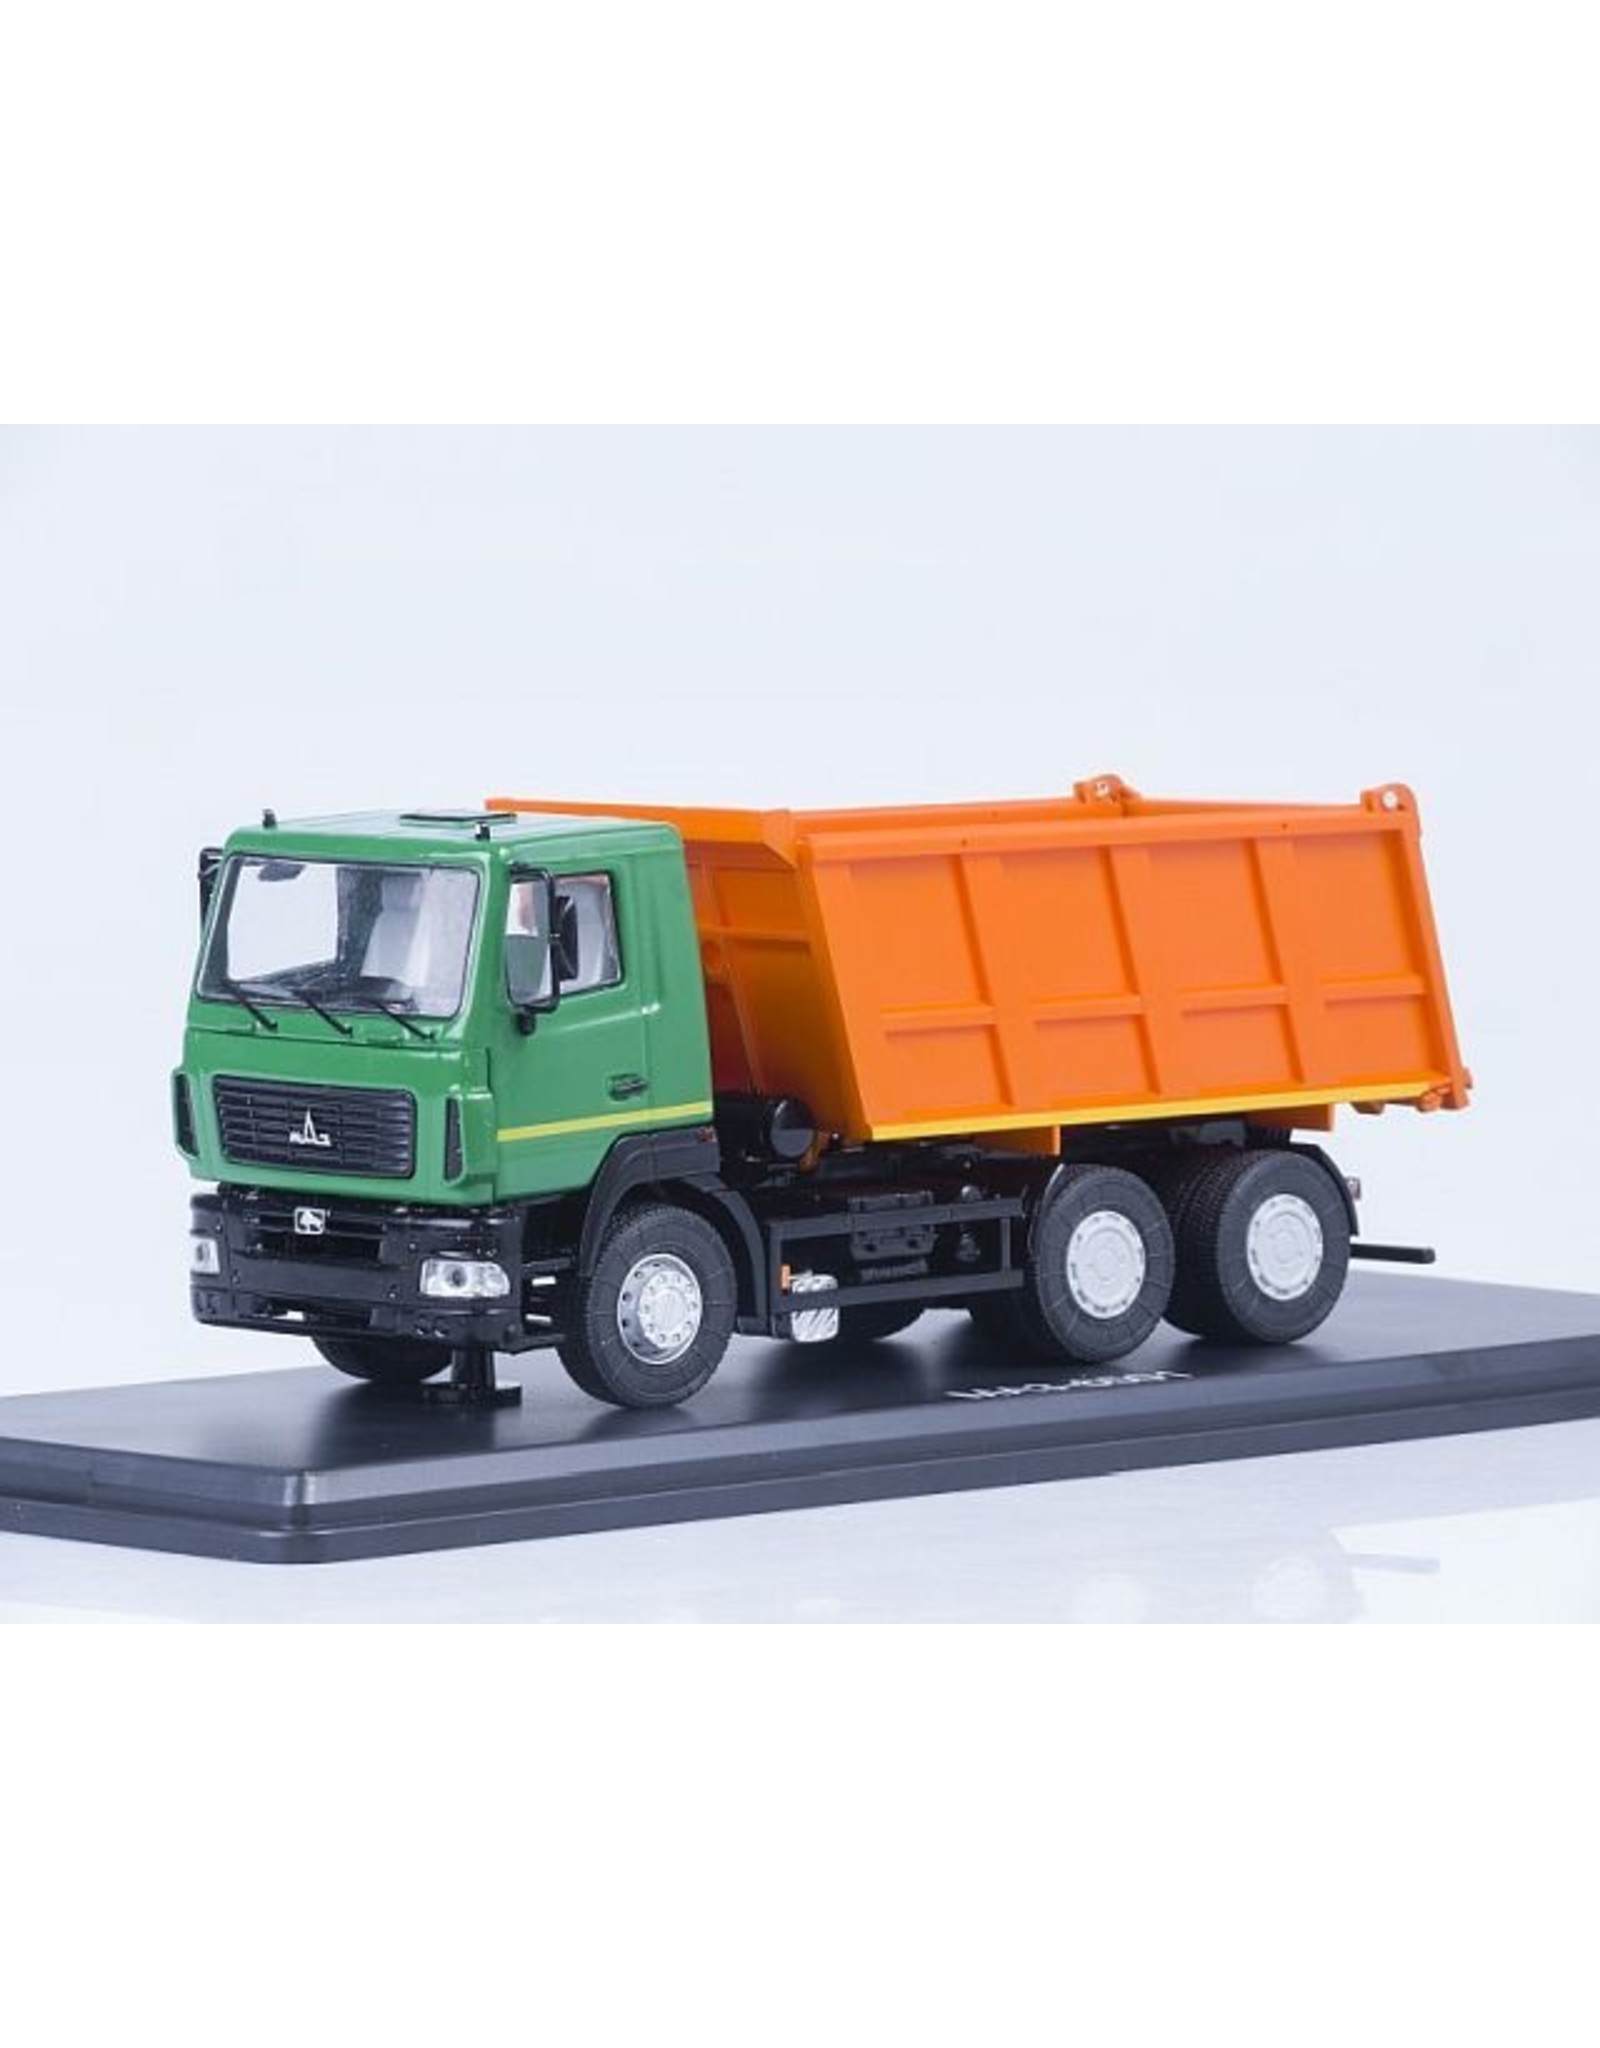 MAZ(Minski Avtomobilnyi Zavod) MAZ-6501 DUMPER TRUCK(facelift)green/orange